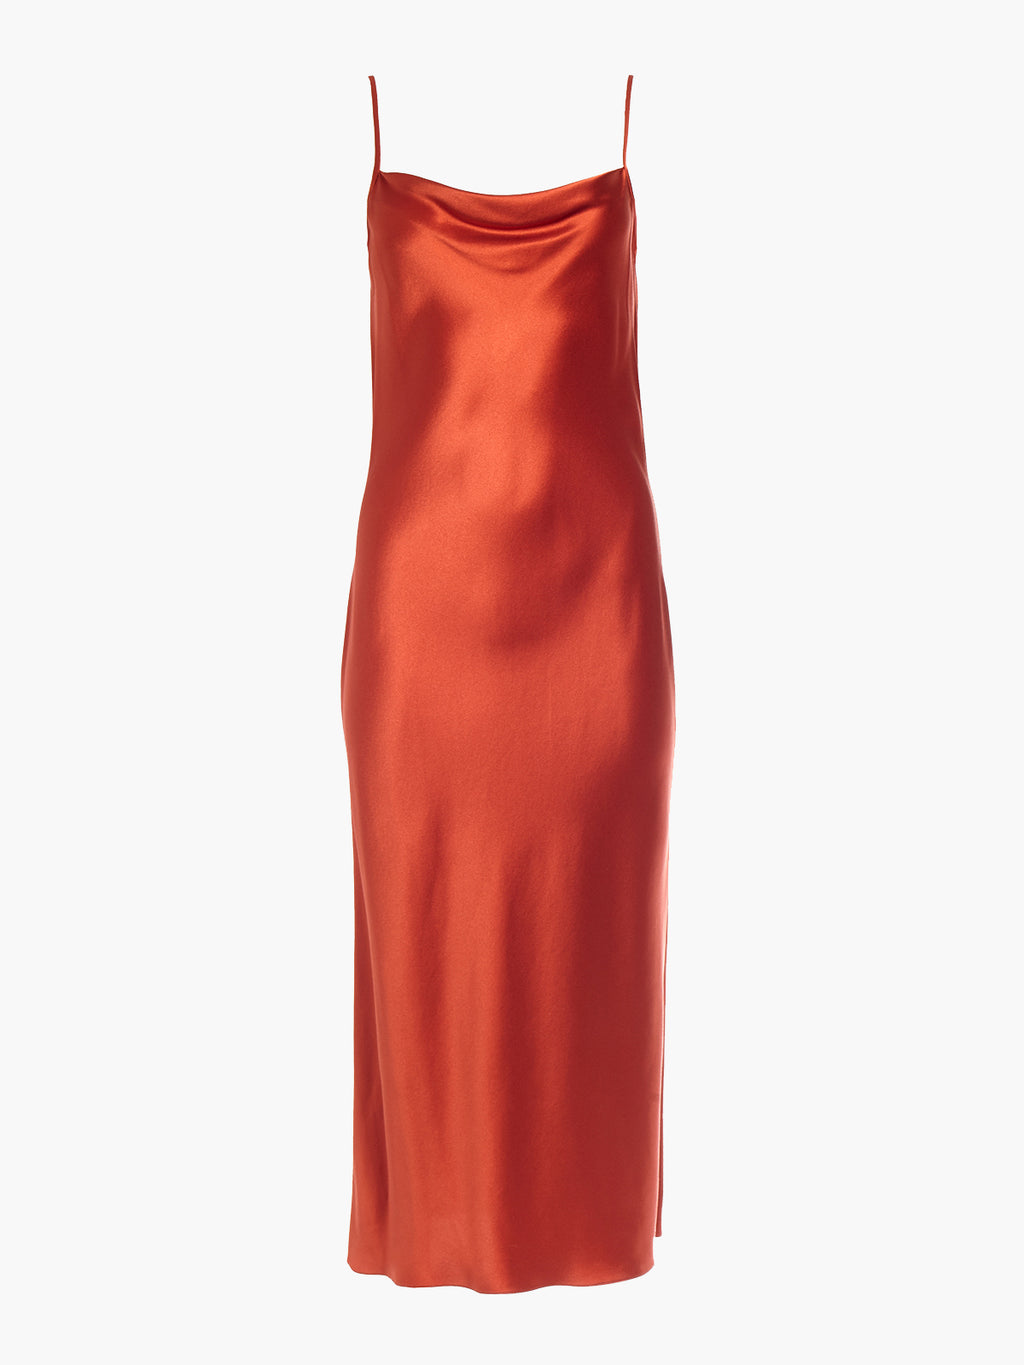 Draped Spaghetti Strap Midi Dress | Burnt Orange - Fashionkind